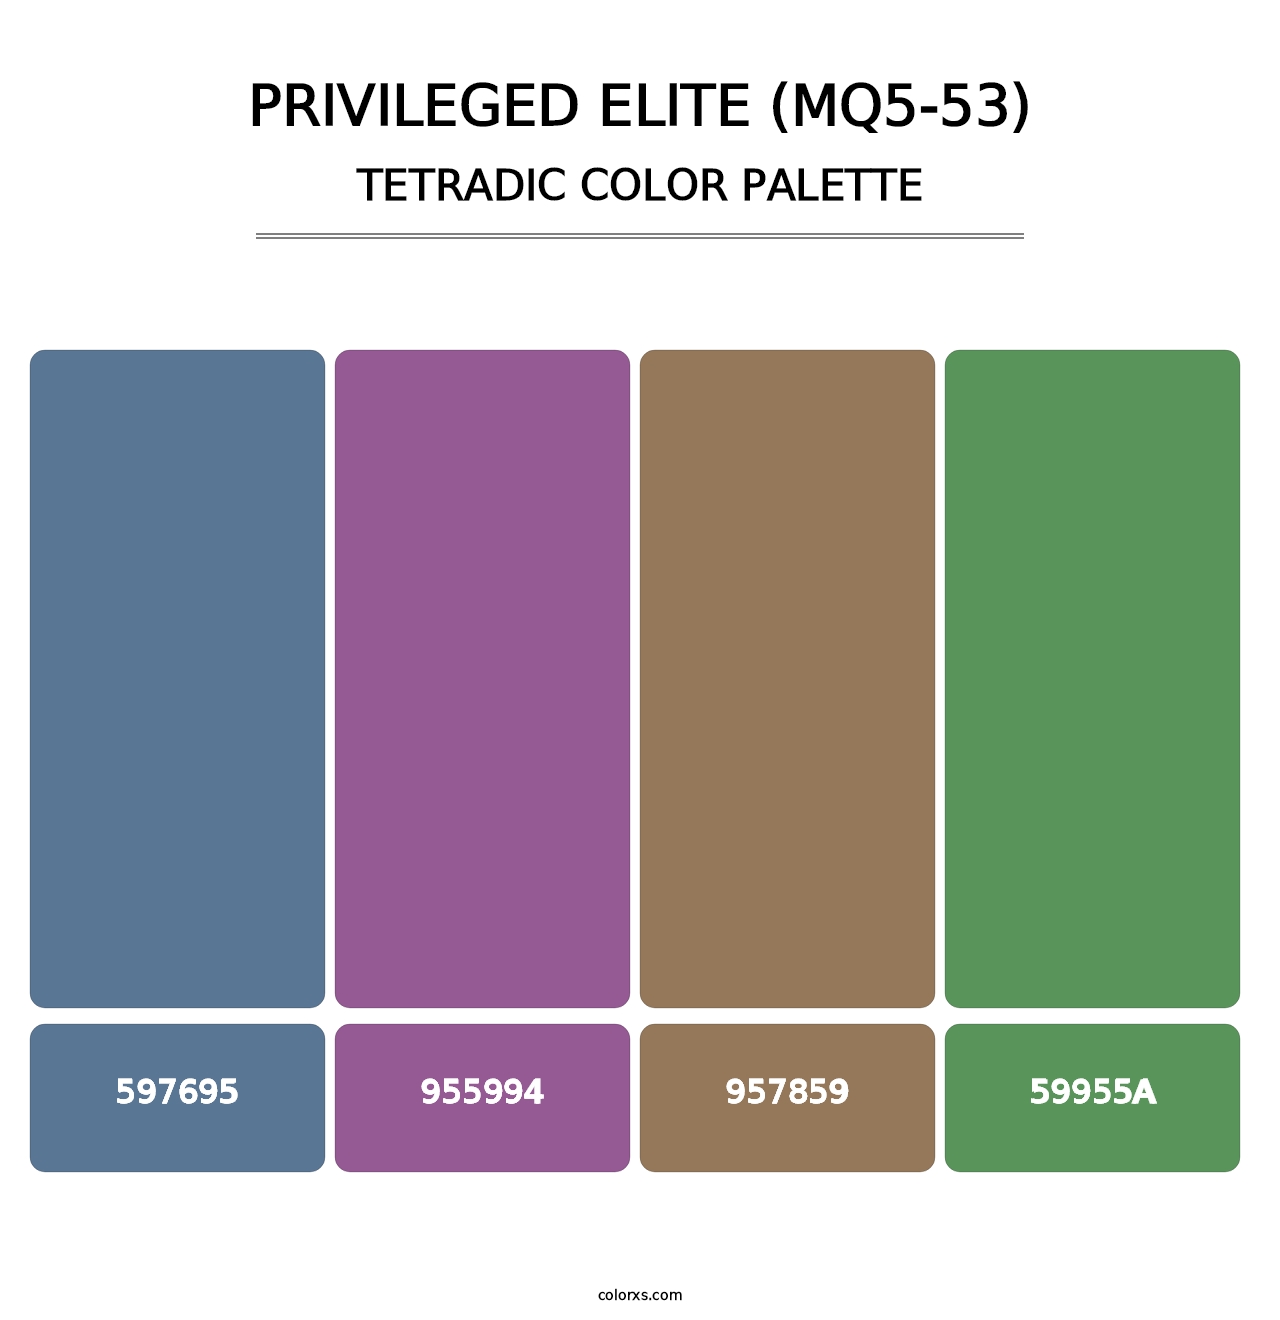 Privileged Elite (MQ5-53) - Tetradic Color Palette